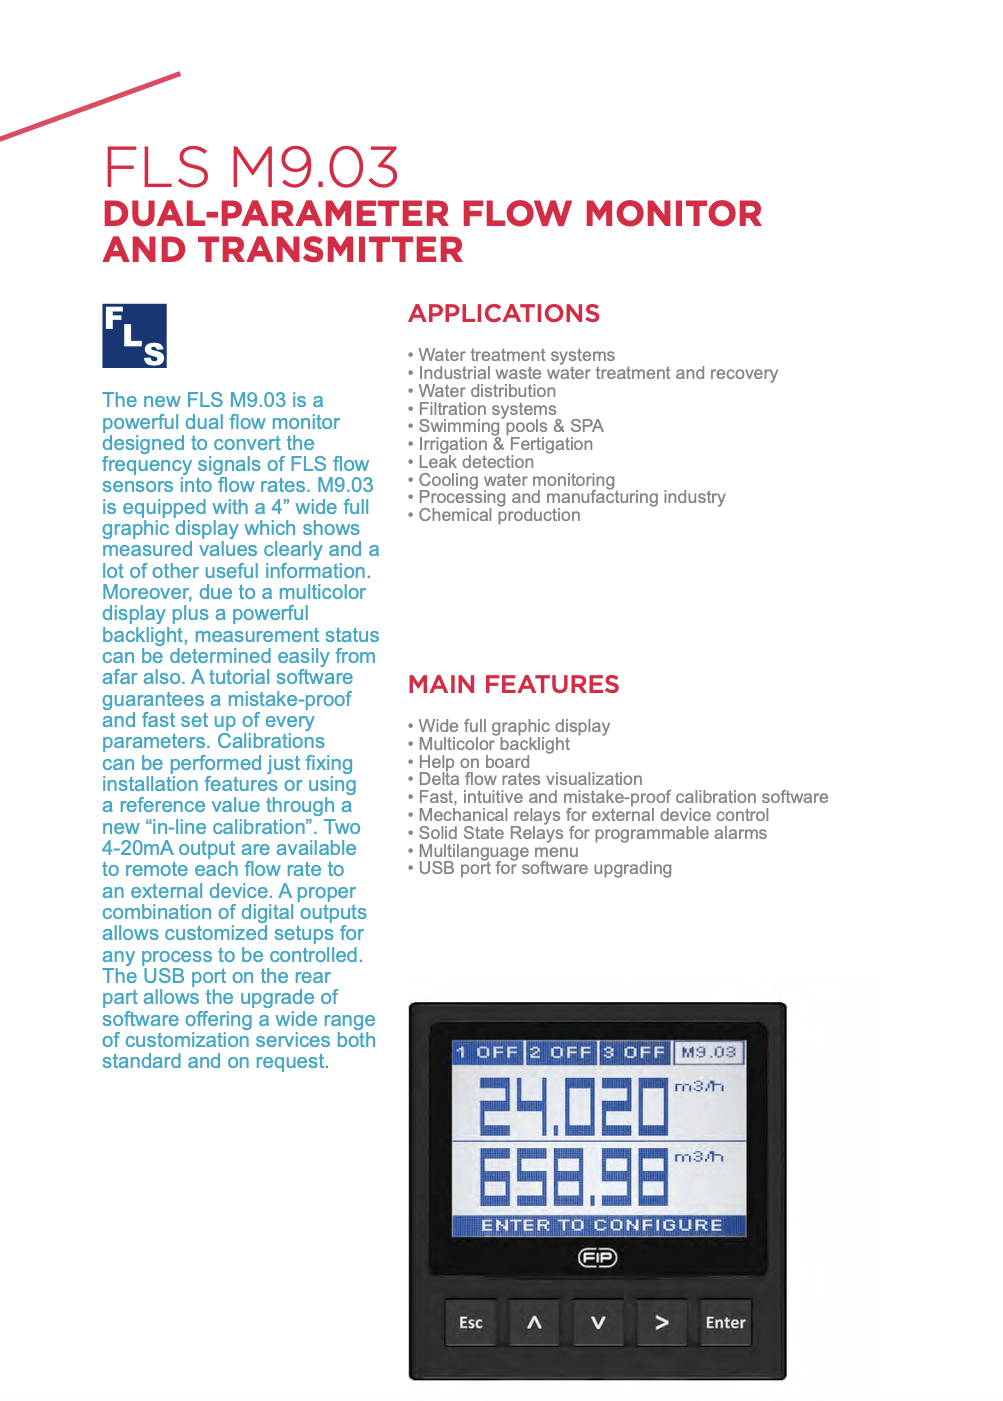 M9.03 Dual-Parameter Flow Monitor and Transmitter